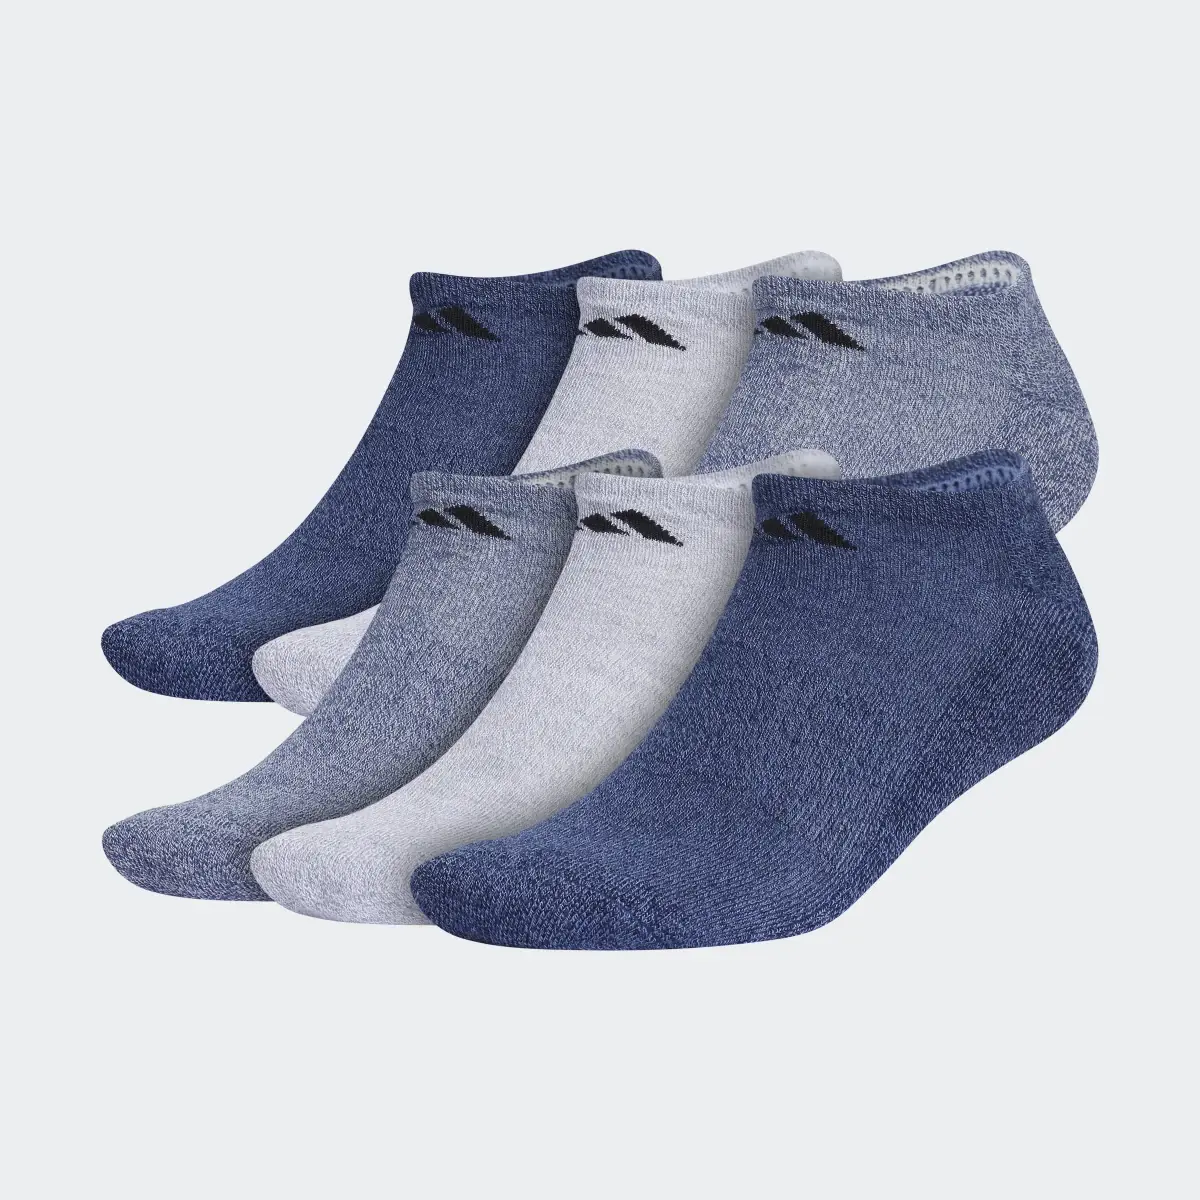 Adidas Athletic Cushioned No-Show Socks 6 Pack. 2